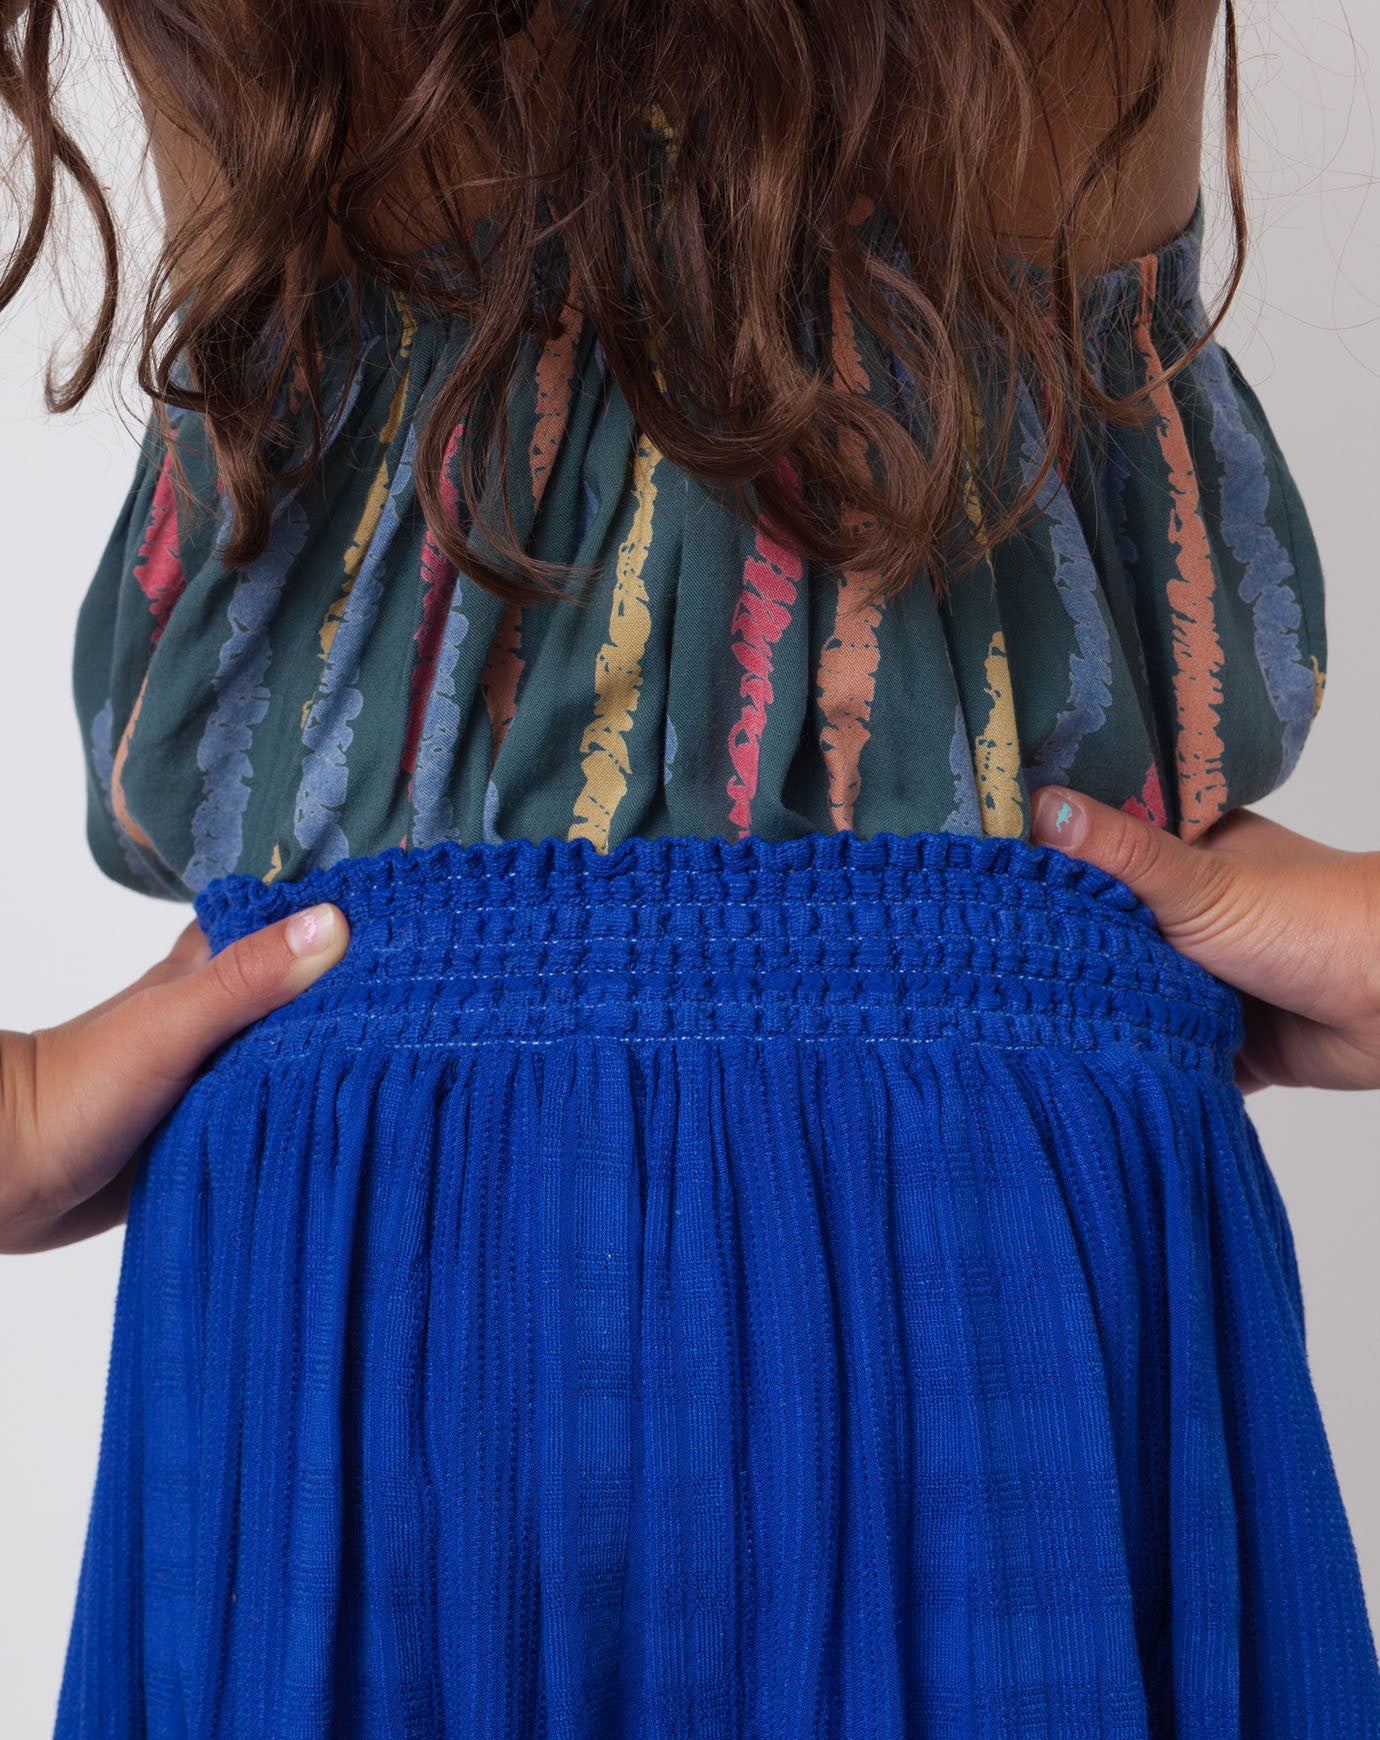 Nico Nico Joplin Textured Skirt in Blueberry